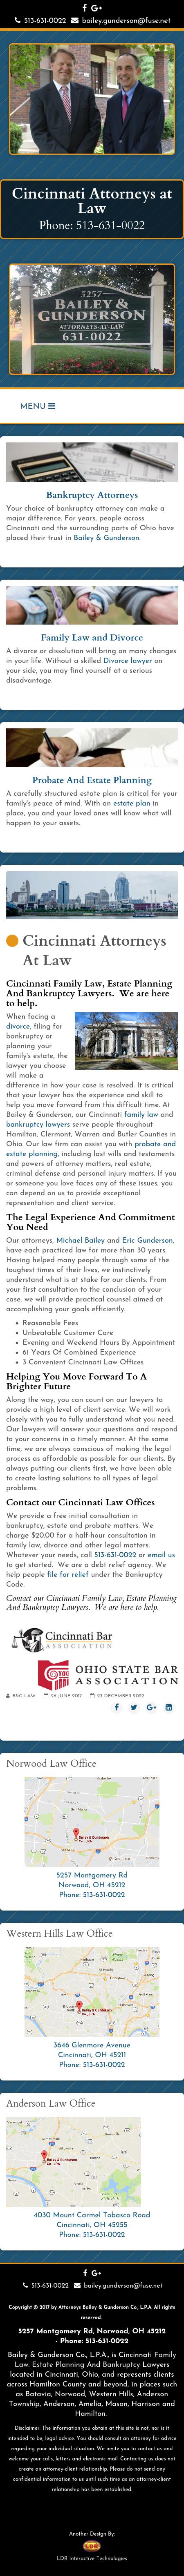 Bailey & Gunderson Co., L.P.A. - Cincinnati OH Lawyers